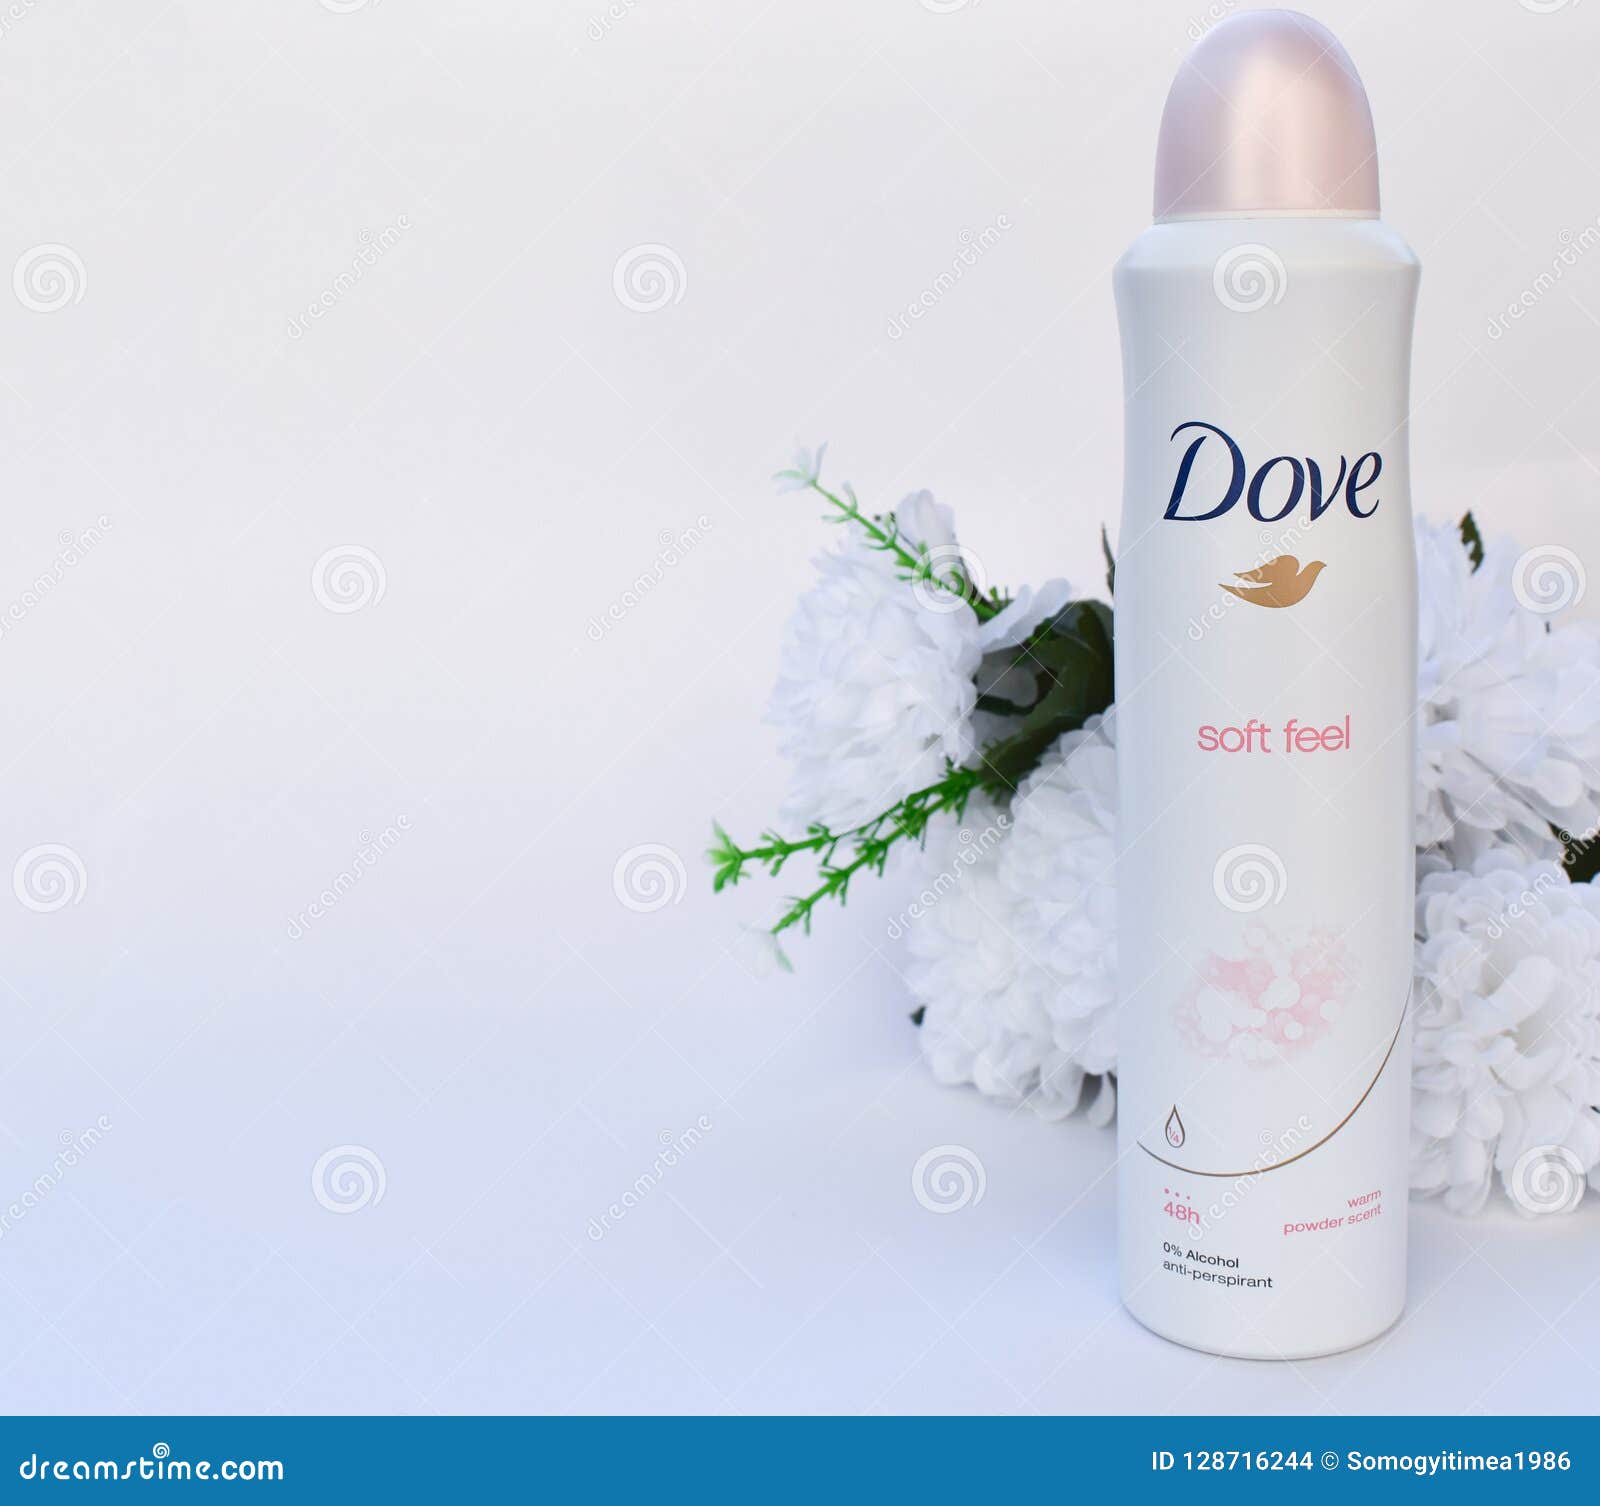 spreiding Schoolonderwijs Persoonlijk Dove Soft Feel Deodorant with Flower on White Background. Editorial Stock  Image - Image of happy, dove: 128716244